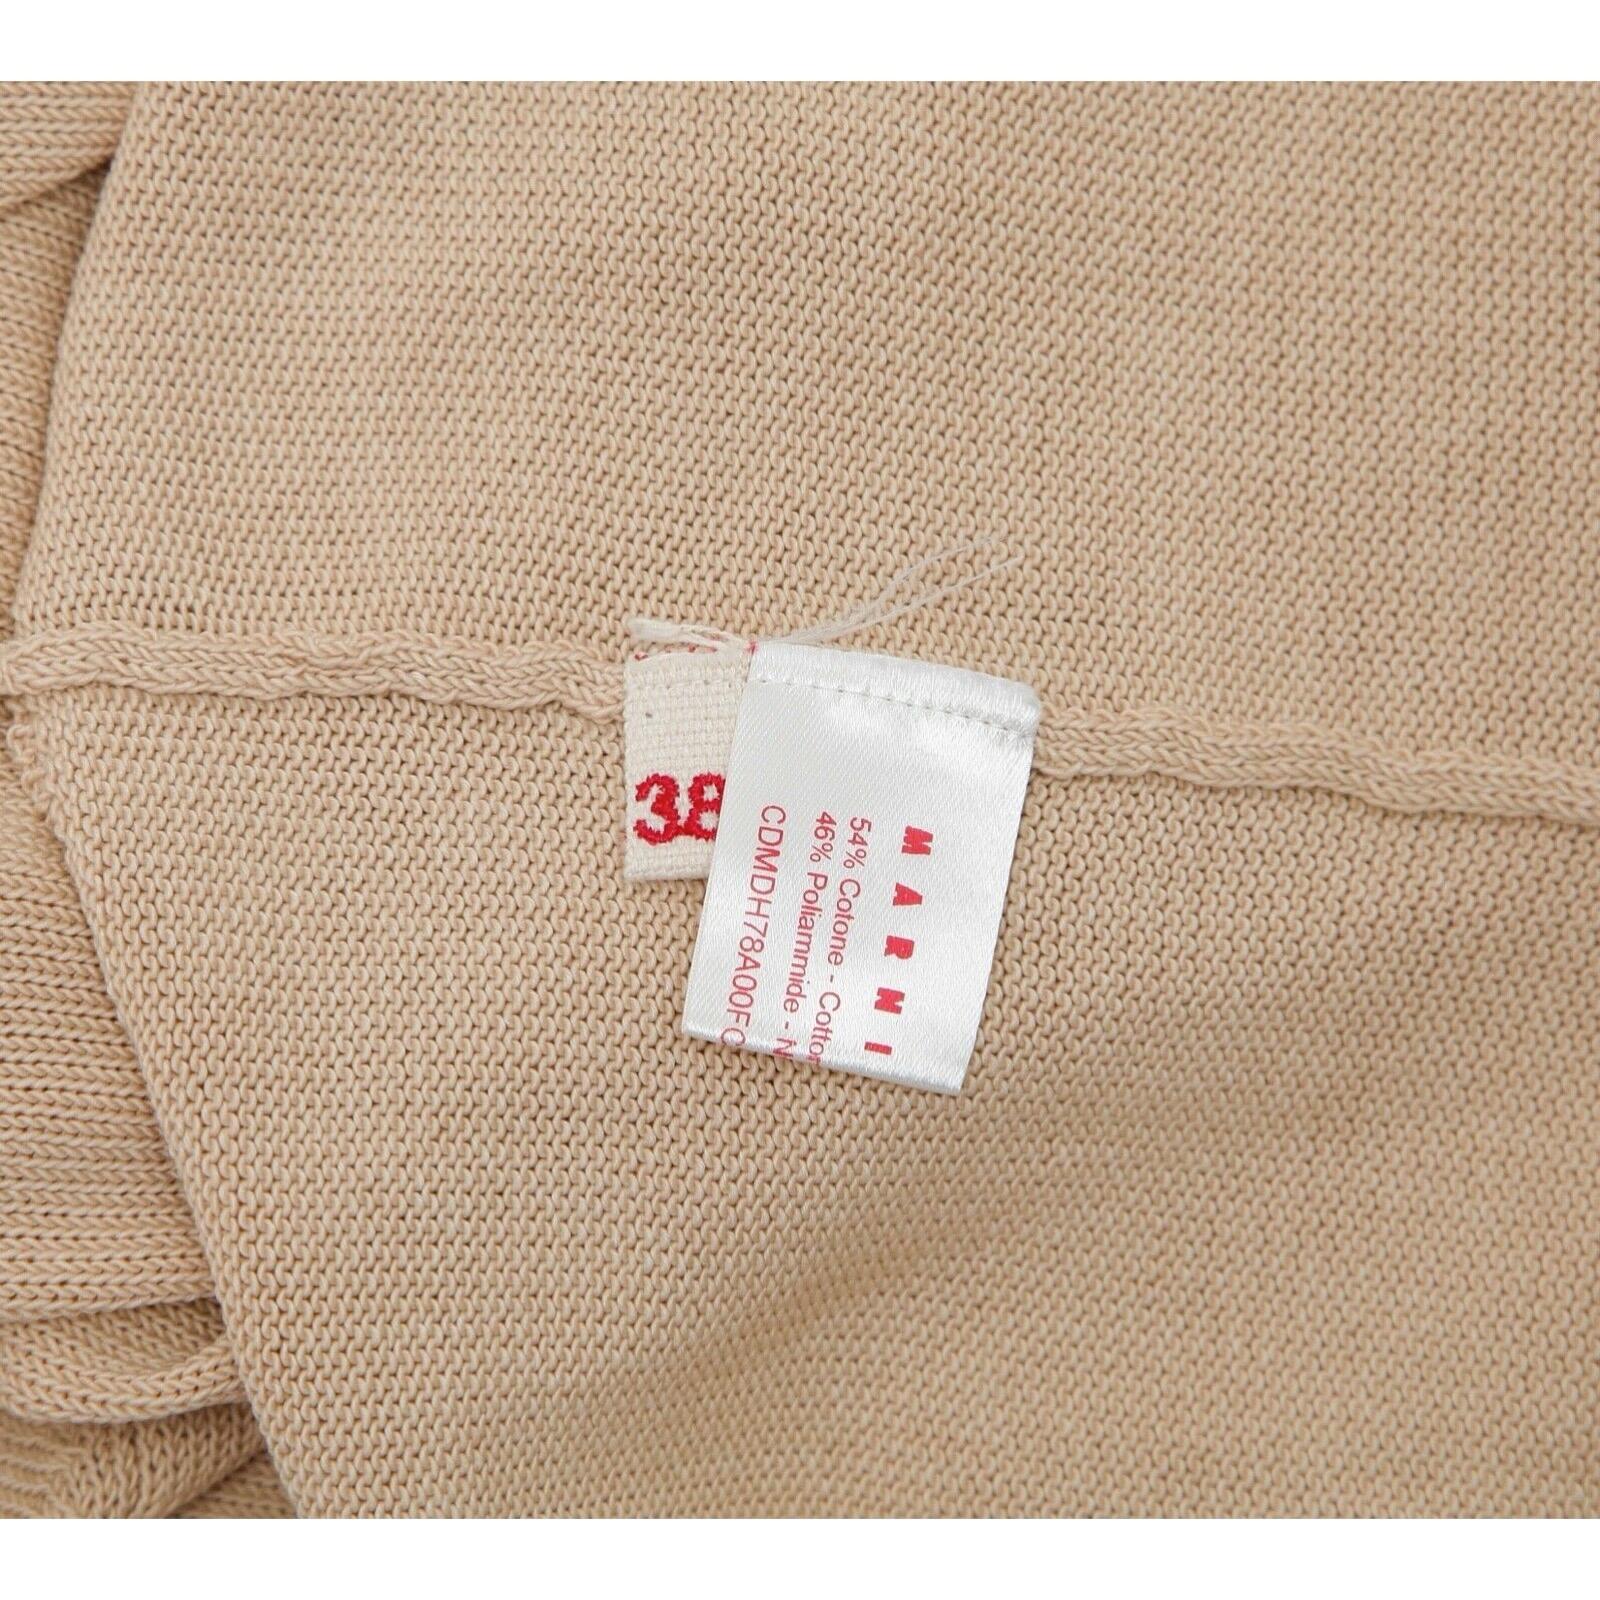 MARNI Beige Sweater Cardigan Knit Top Crewneck Long Sleeve Buttons Sz 38 4